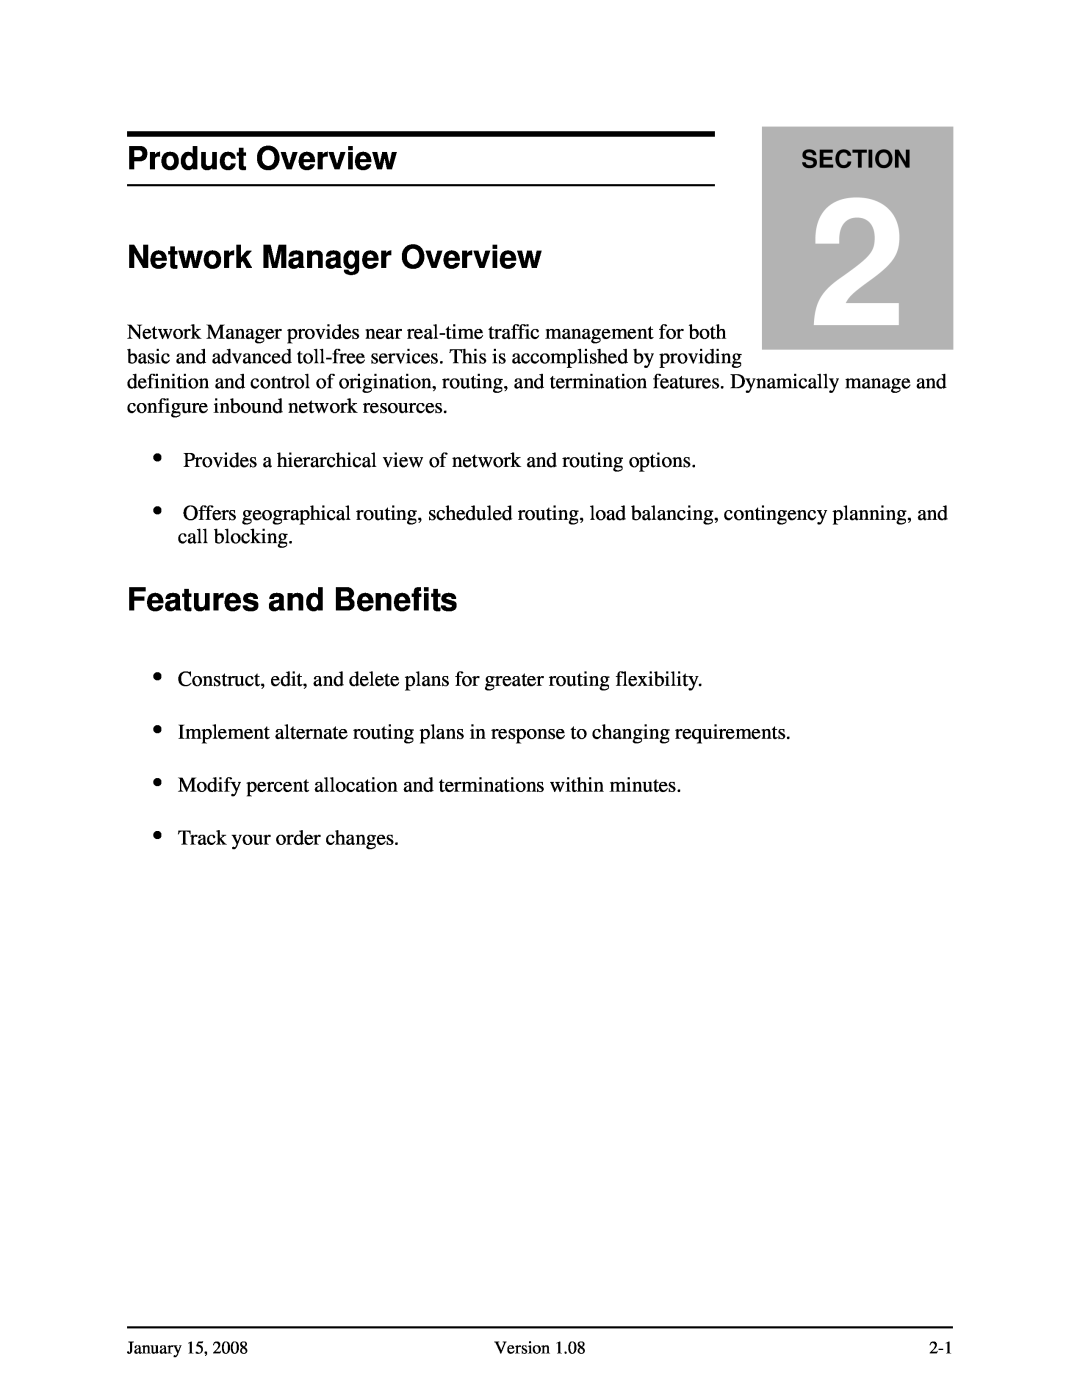 Verizon Network Manager Nodes manual Product Overview Network Manager Overview, Features and Benefits 